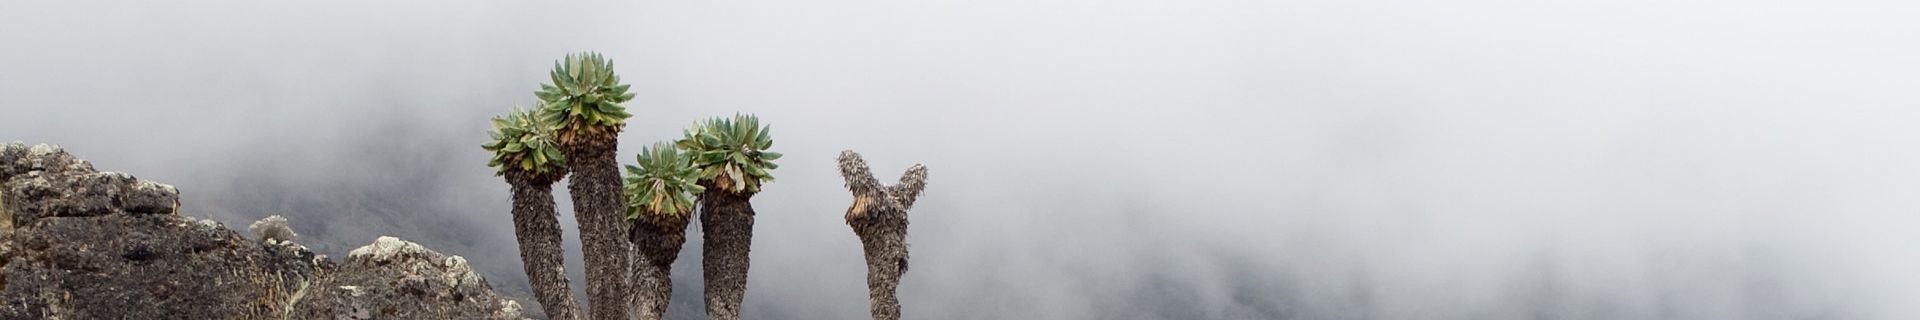 Lobelia Plant in dense fog, Mount Kilimanjaro